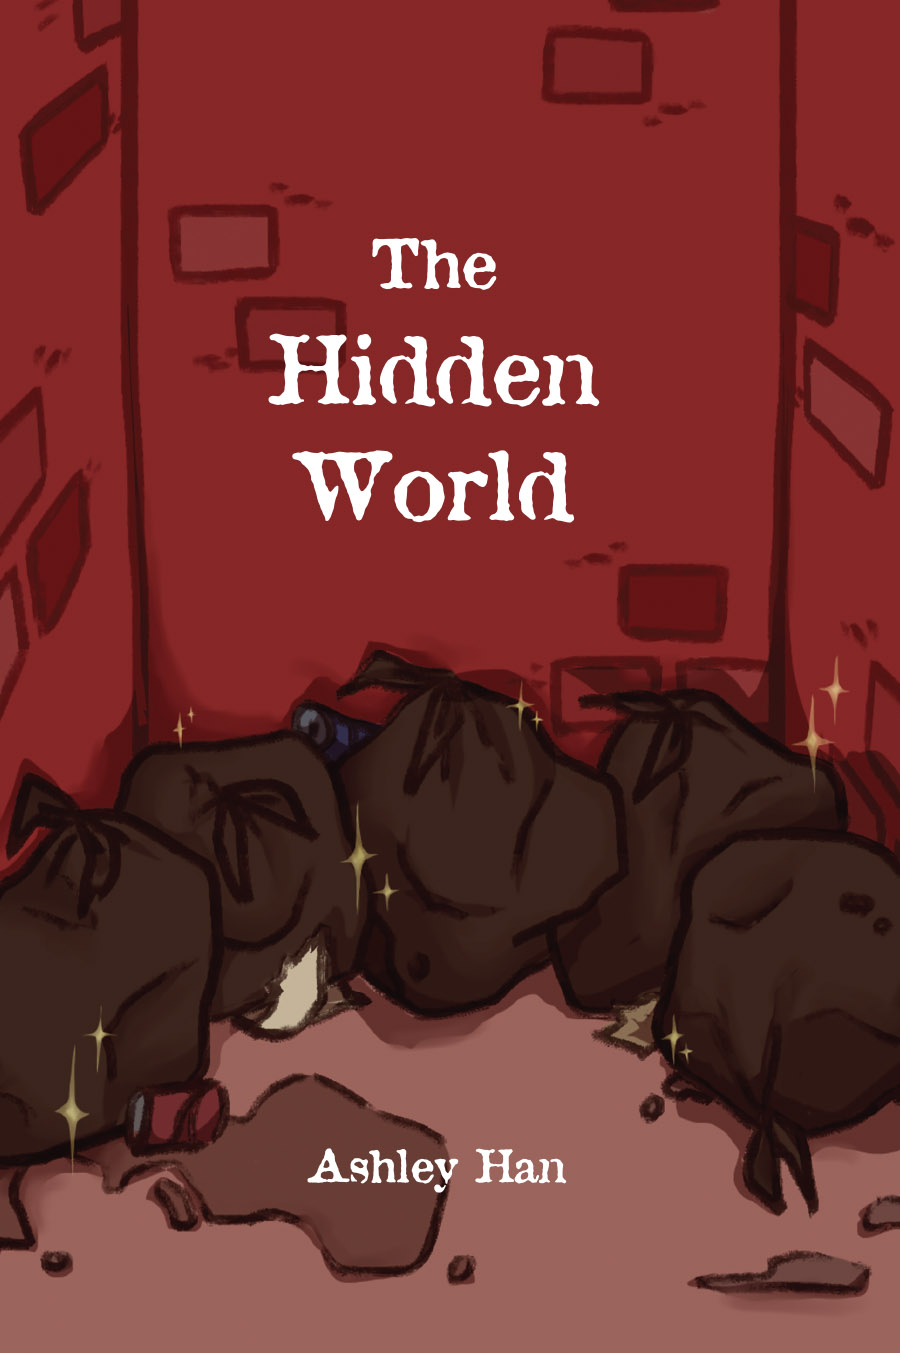 The Hidden World by Ashley Han.